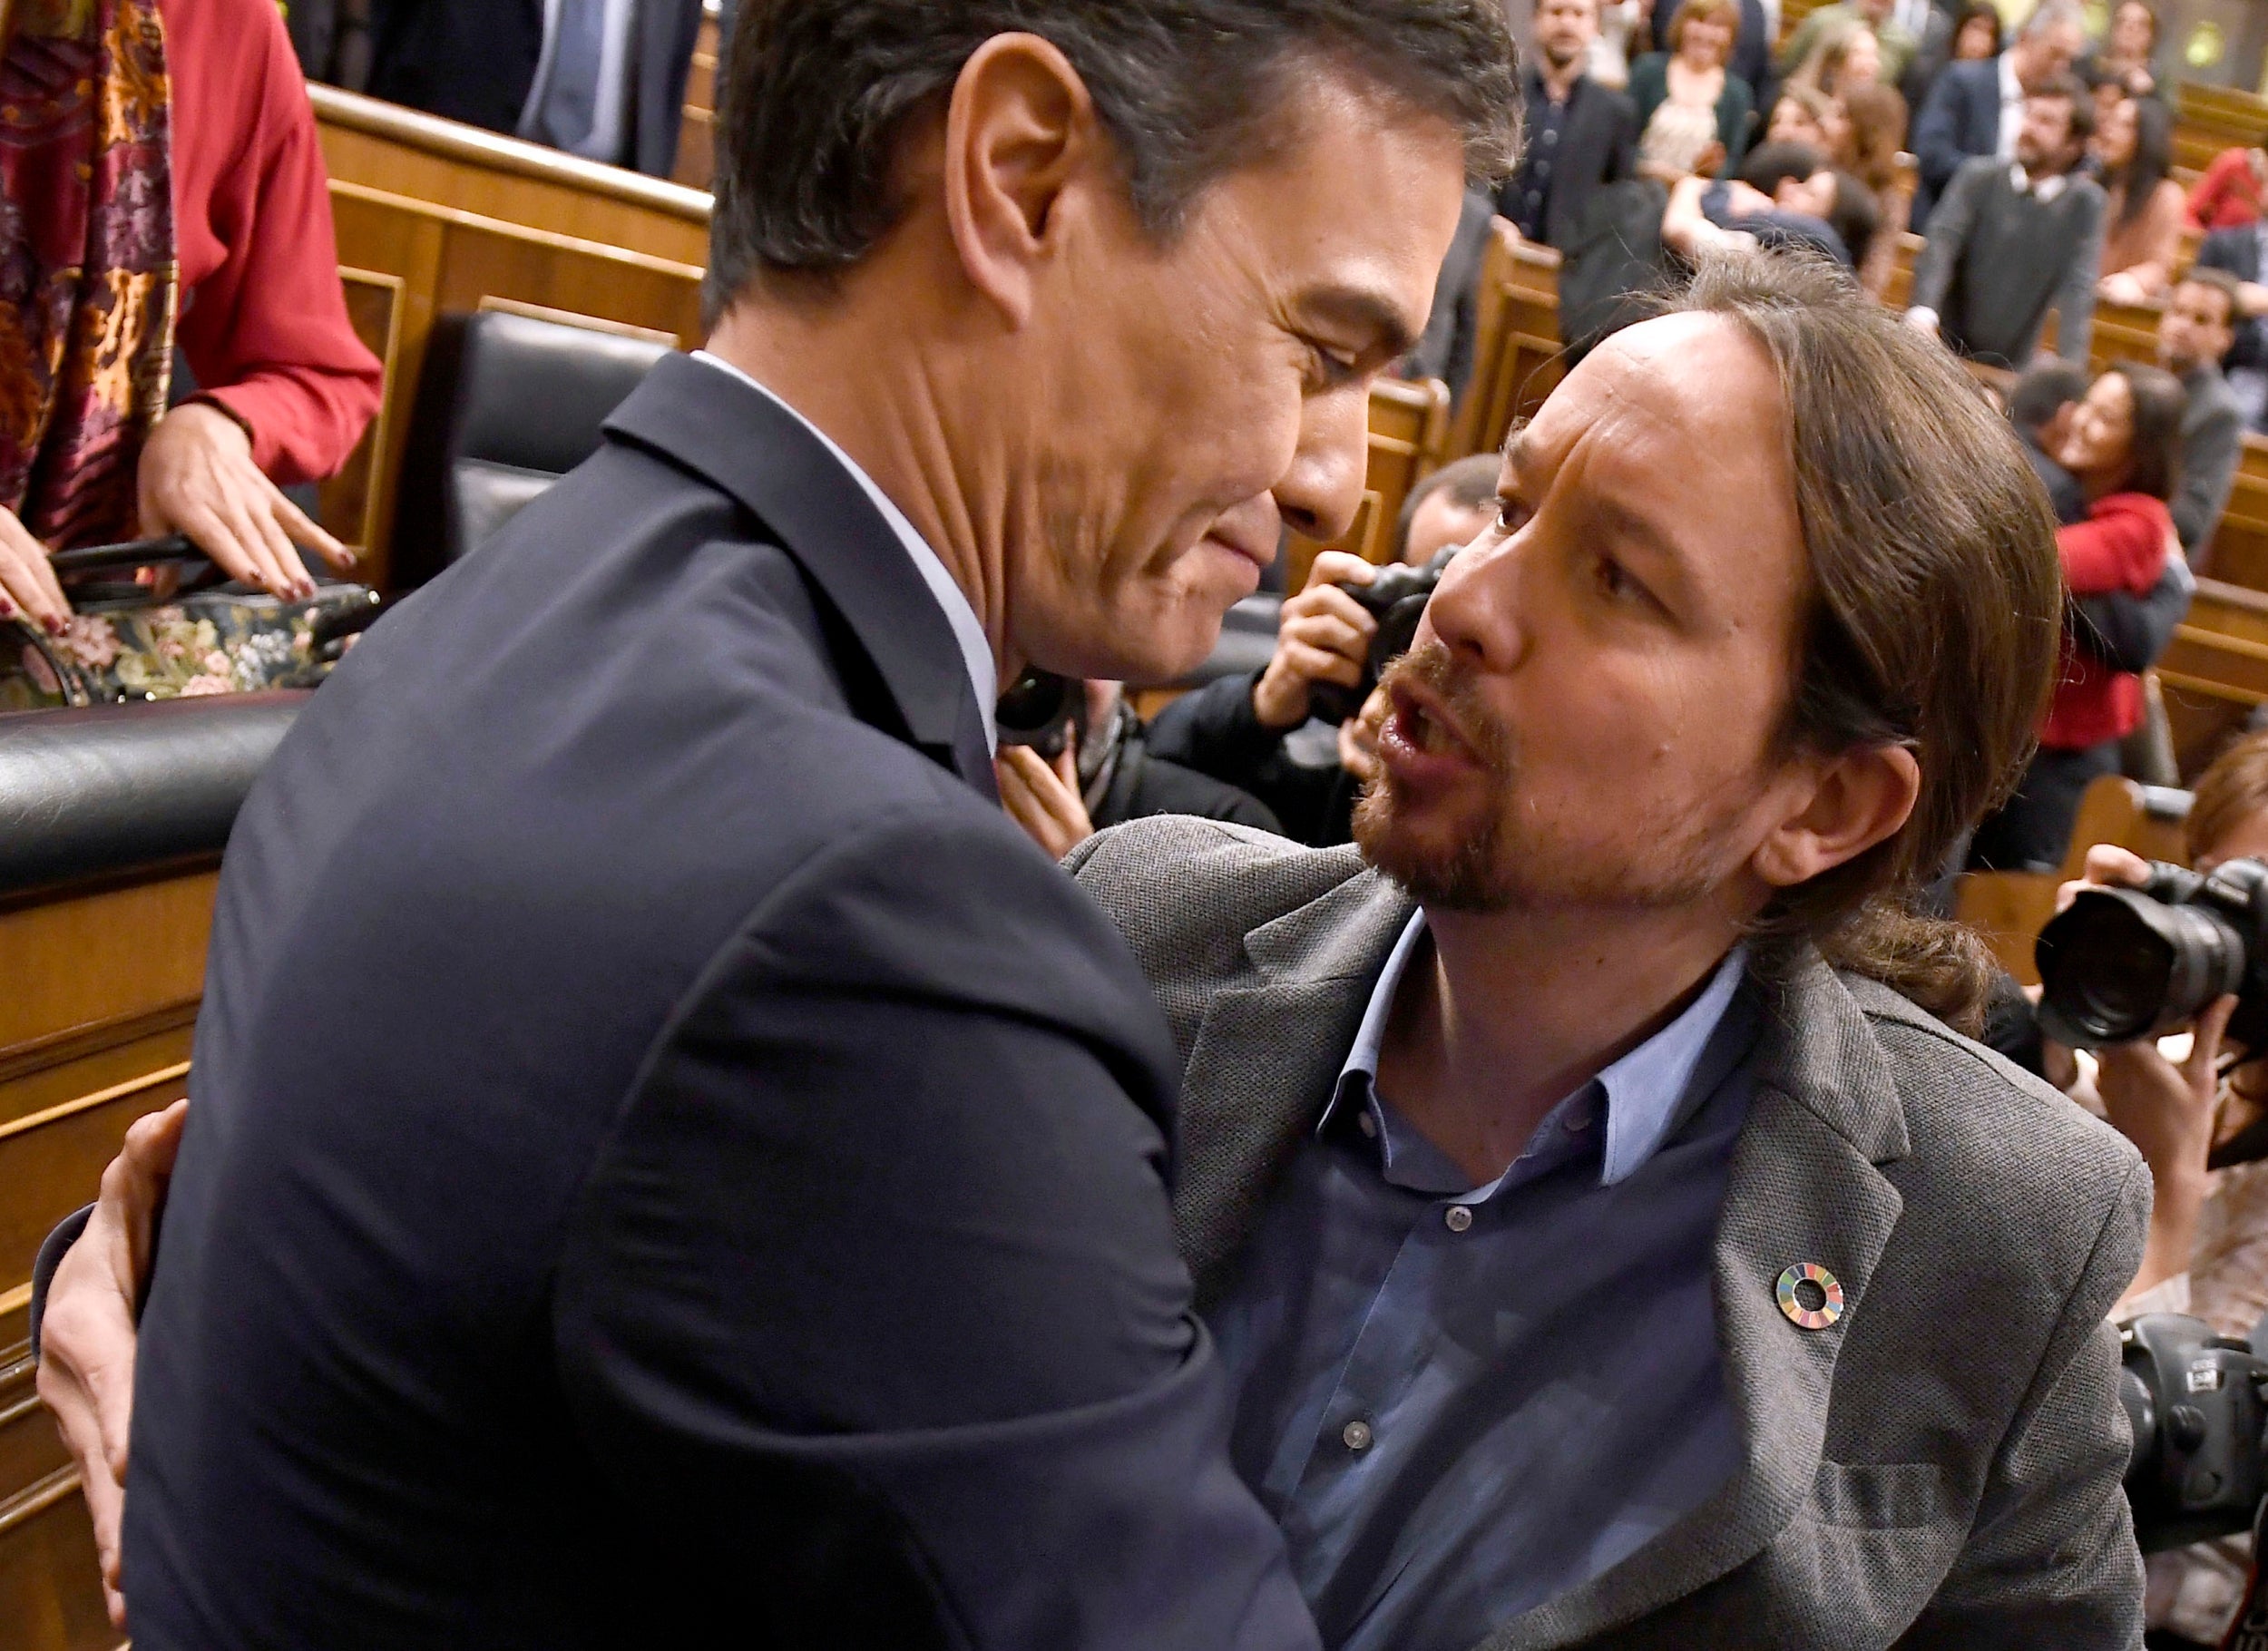 PSOE leader Pedro Sanchez is congratulated by Spanish left-wing Unidas Podemos leader Pablo Iglesias